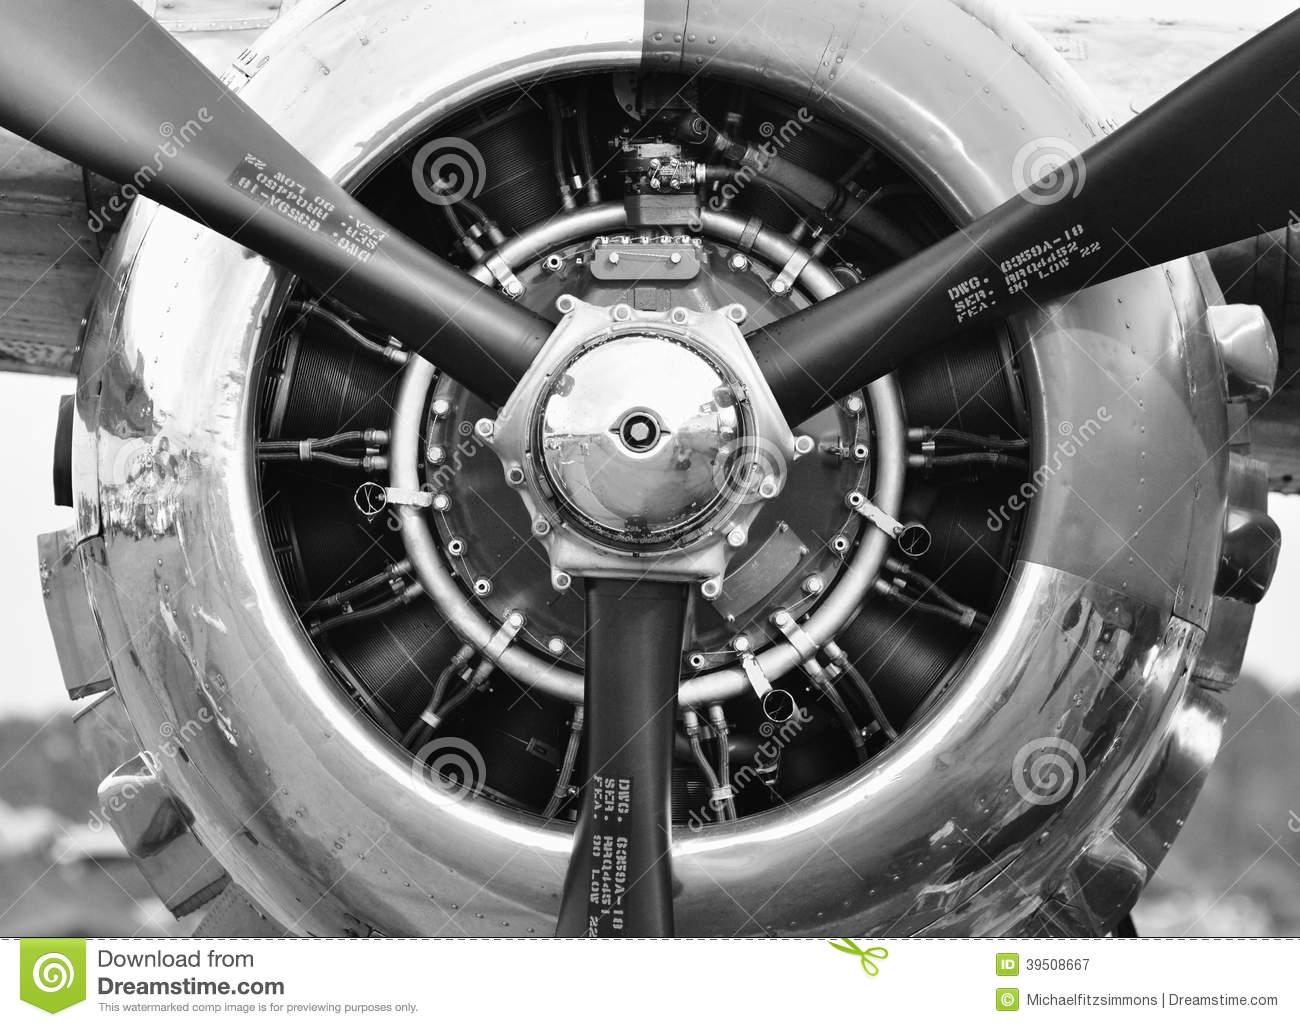 1300 x 1027 · jpeg - Airplane Propeller Engine stock image. Image of life - 39508667